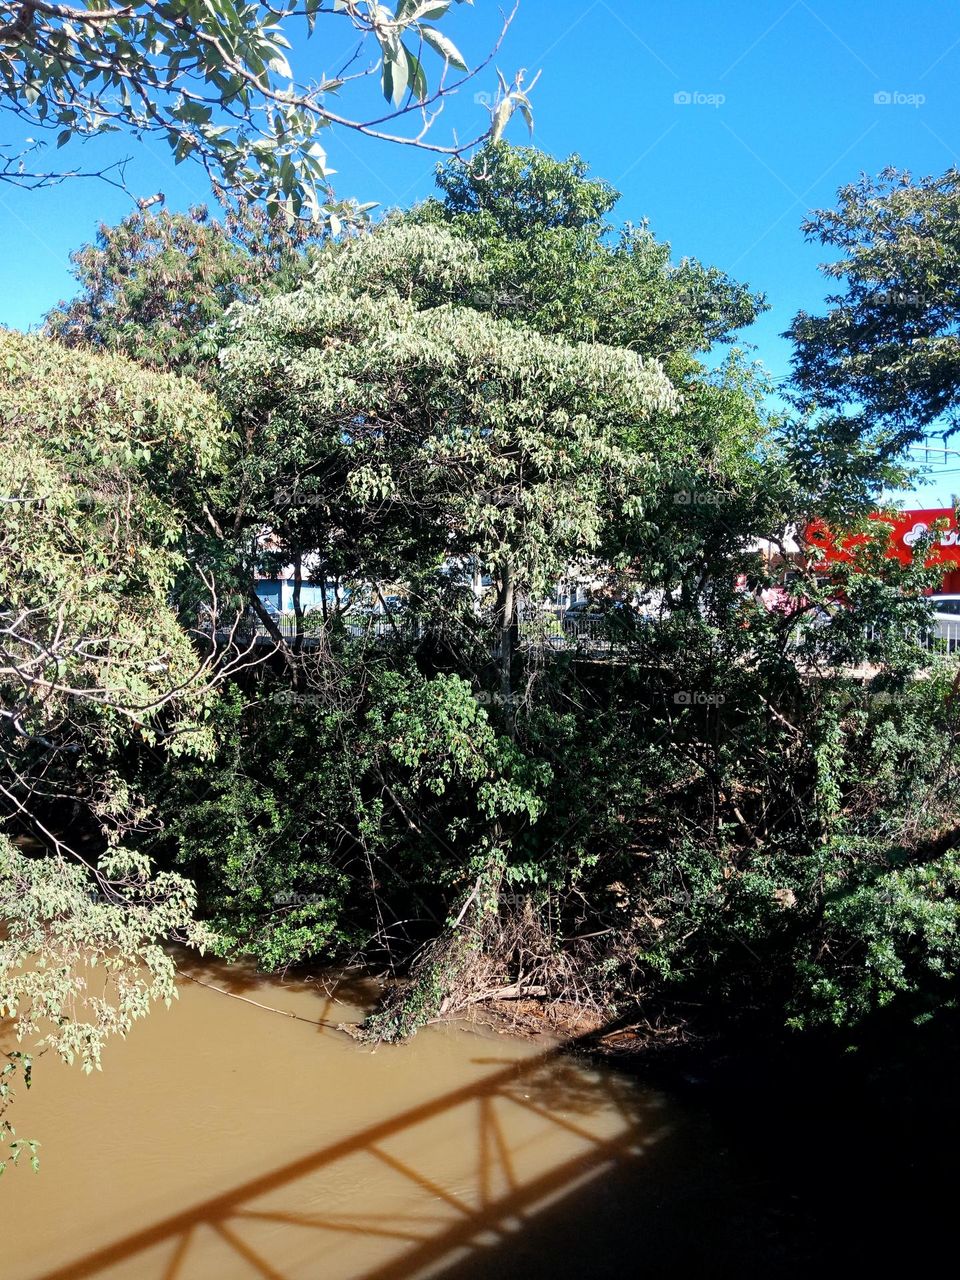 banks from Camandocaia river in Amparo-SP.